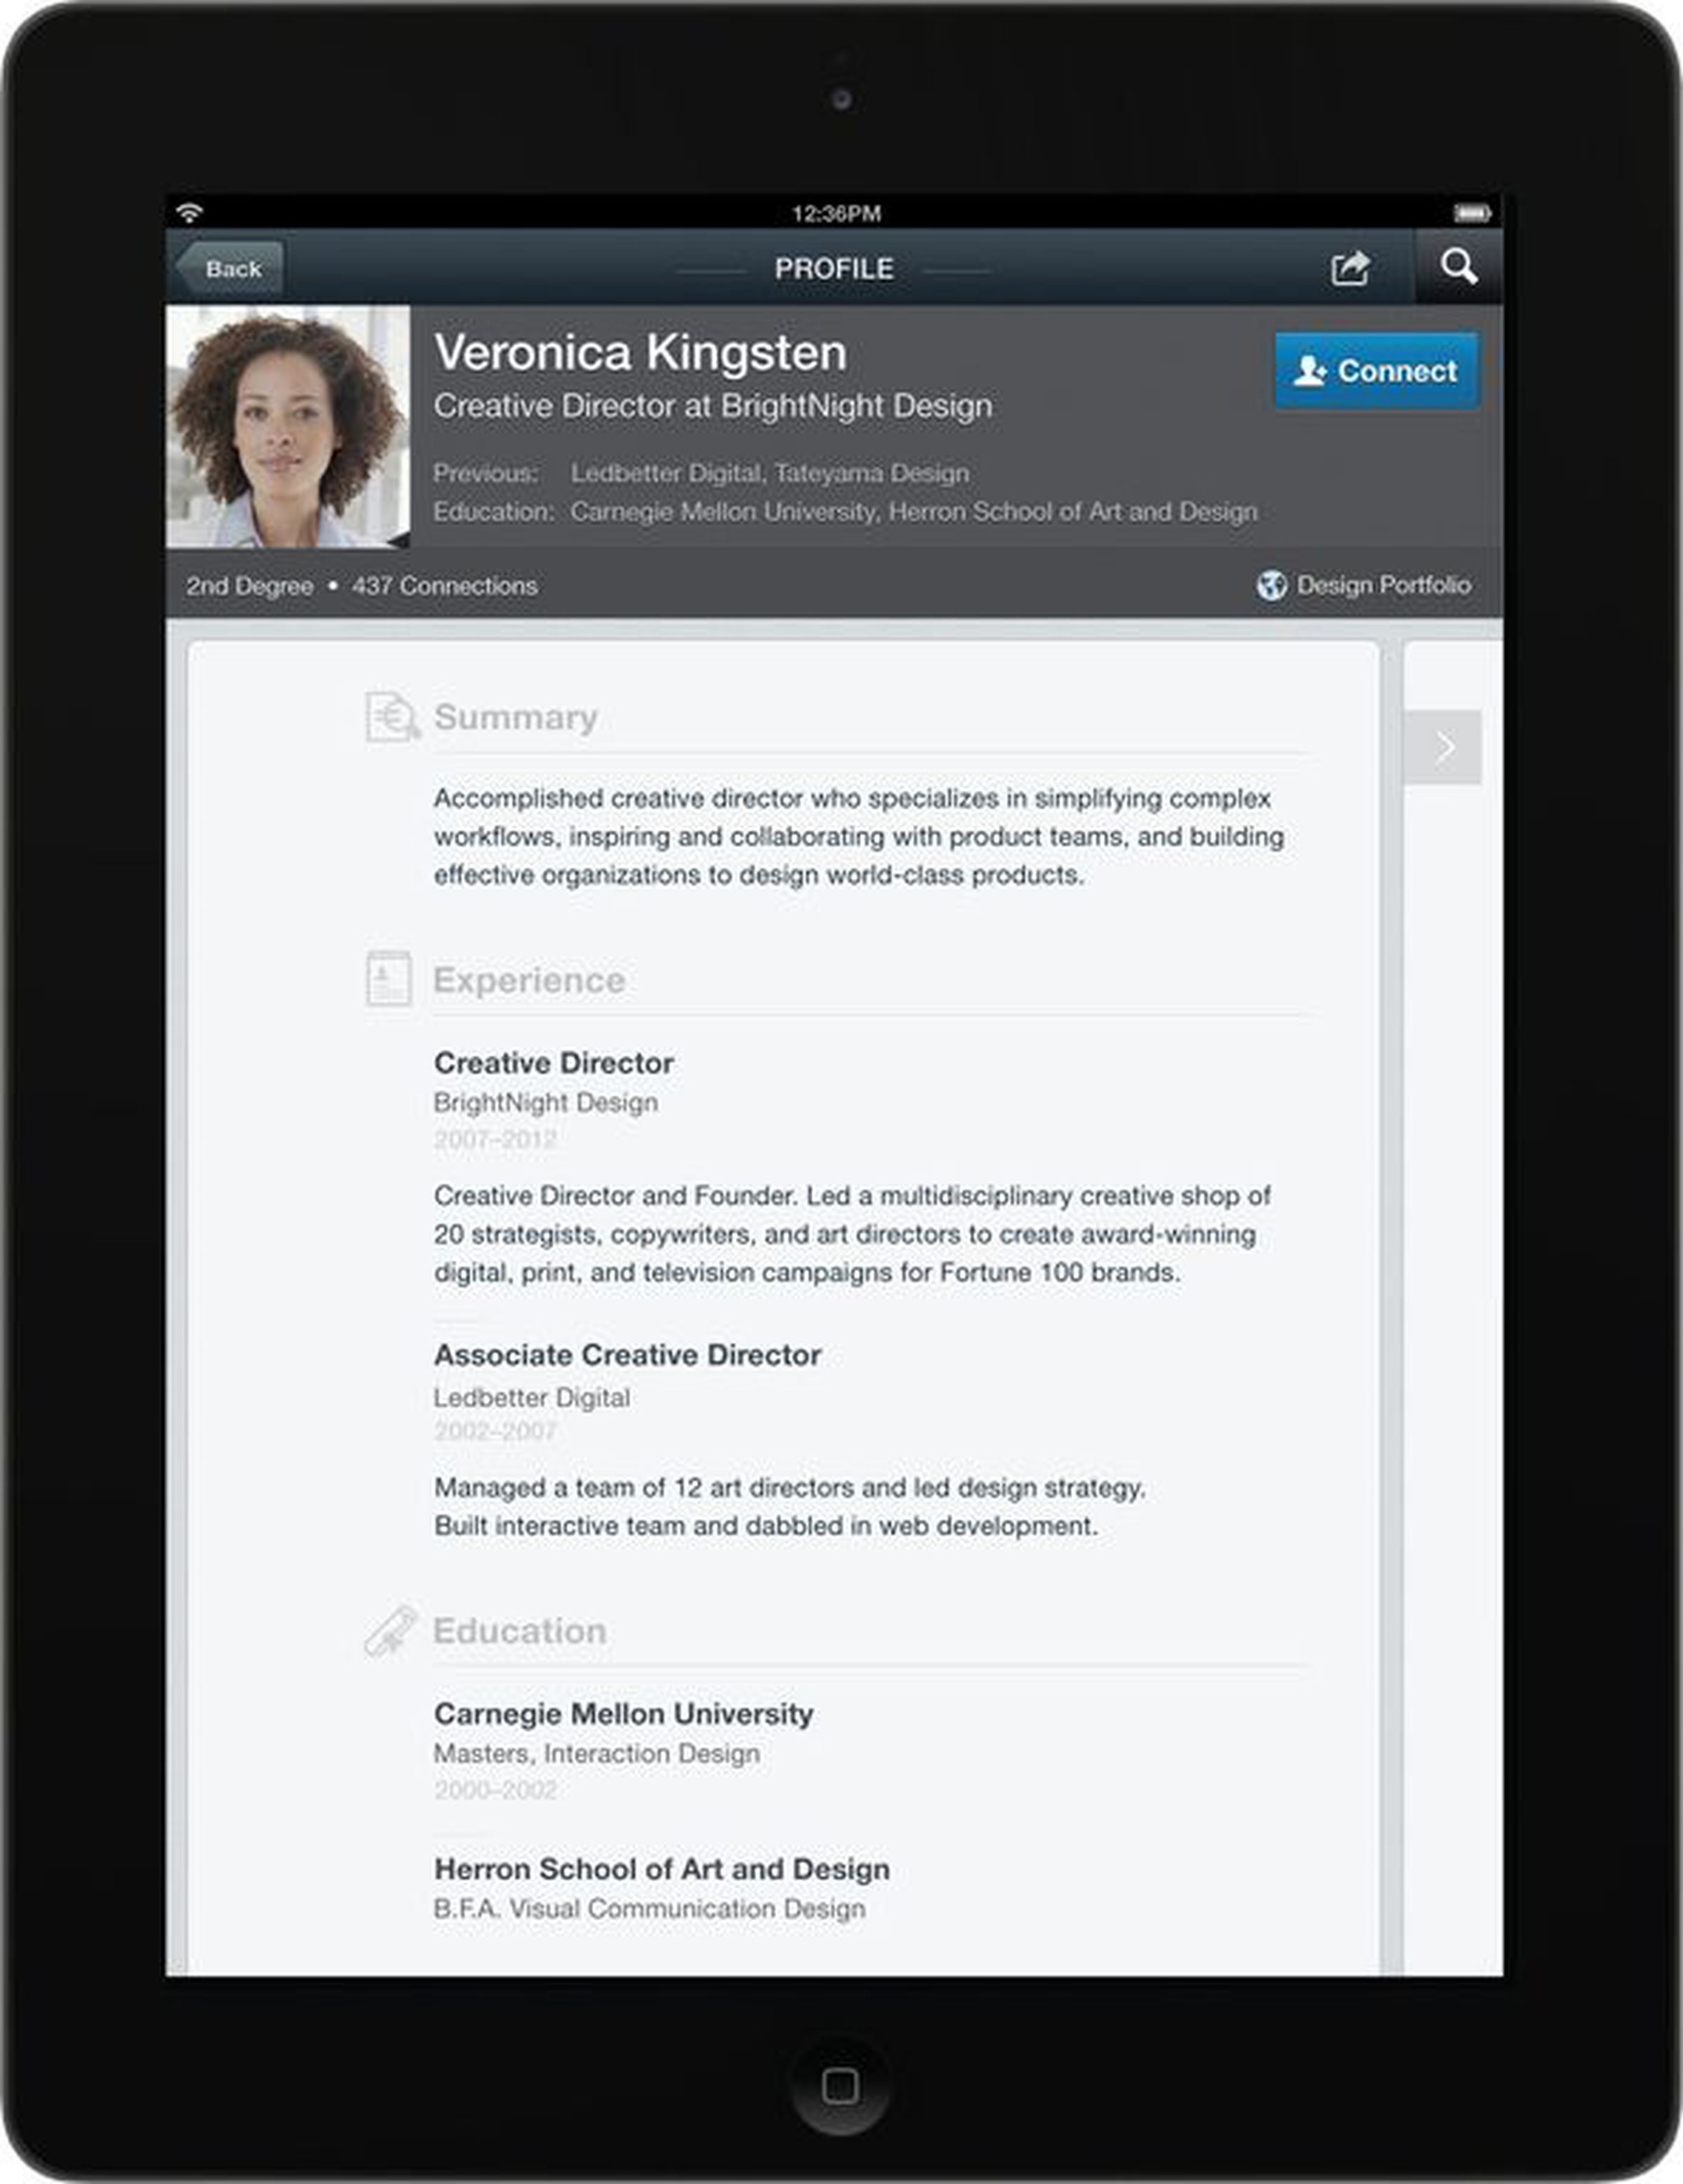 LinkedIn for iPad press images